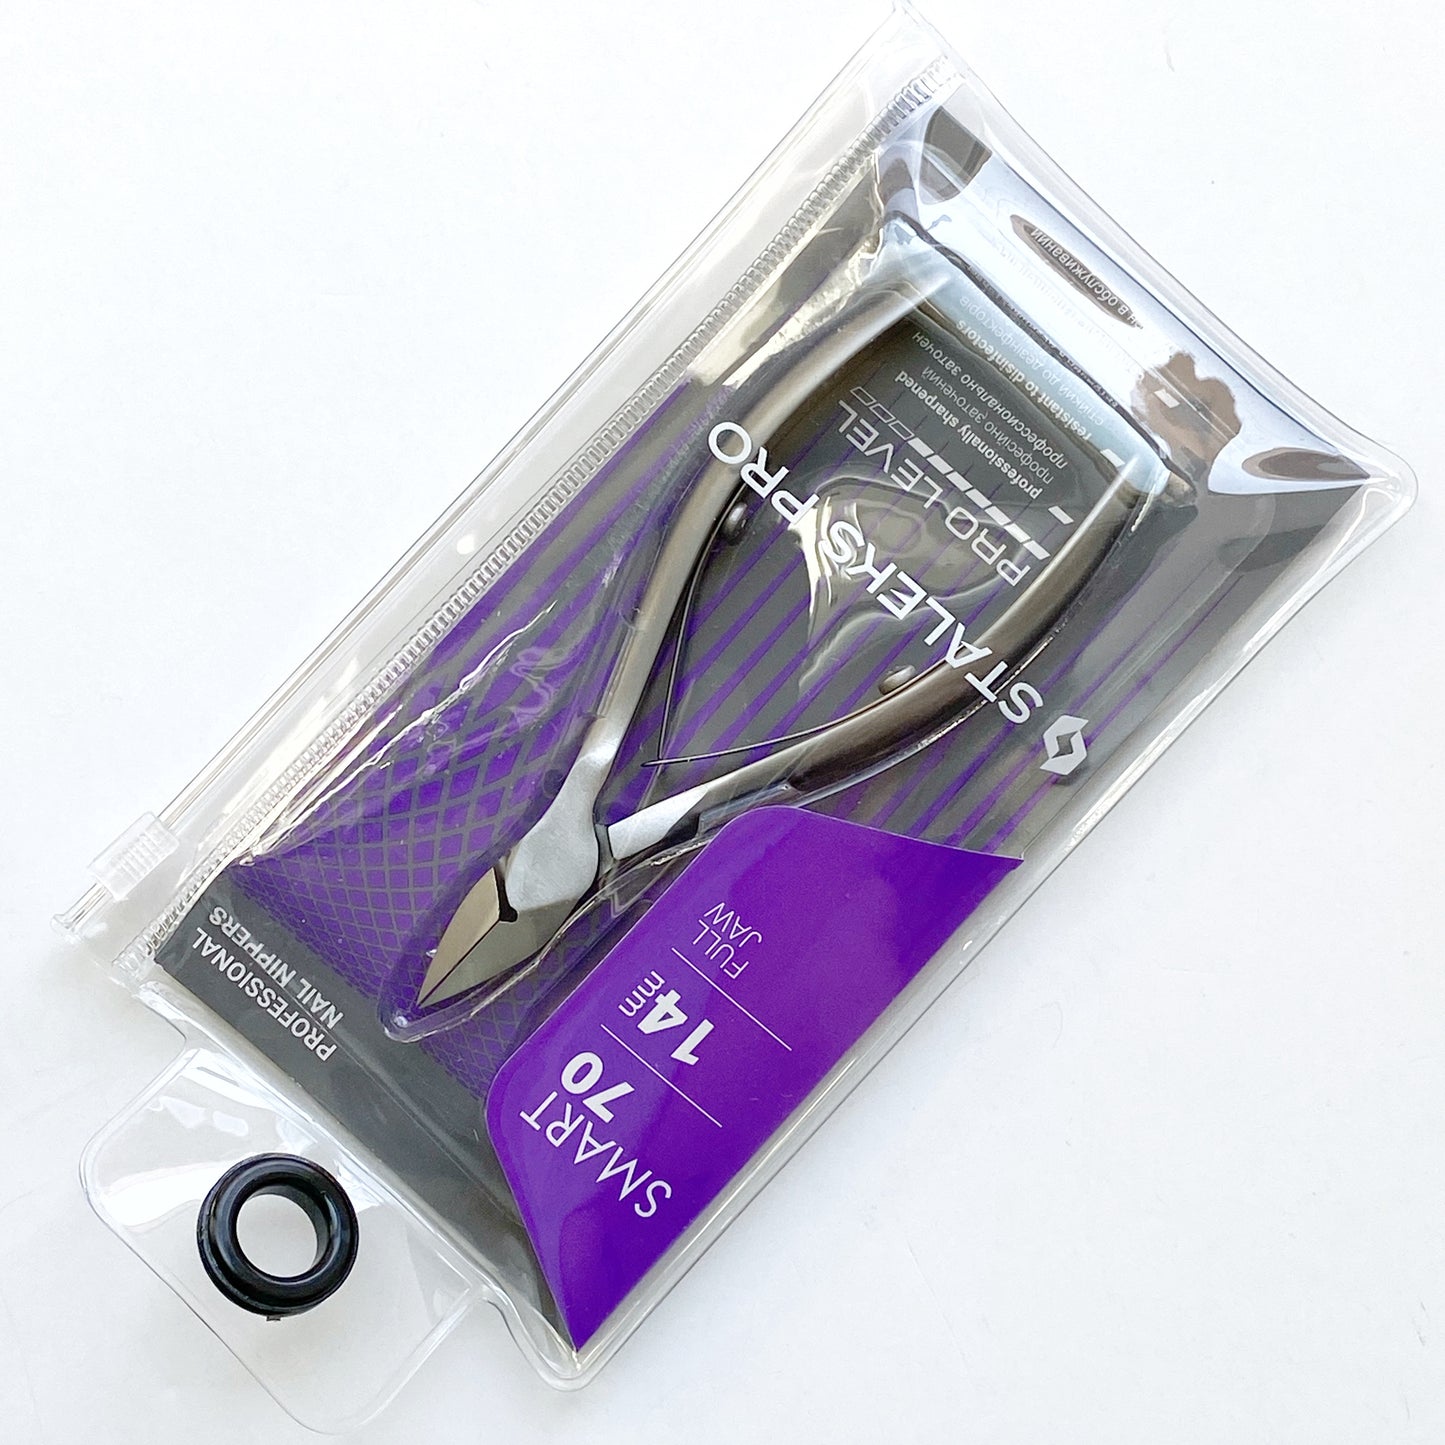 STALEKS Pedicure Nippers for Nails, model SMART NS-70-14 (14mm edge)